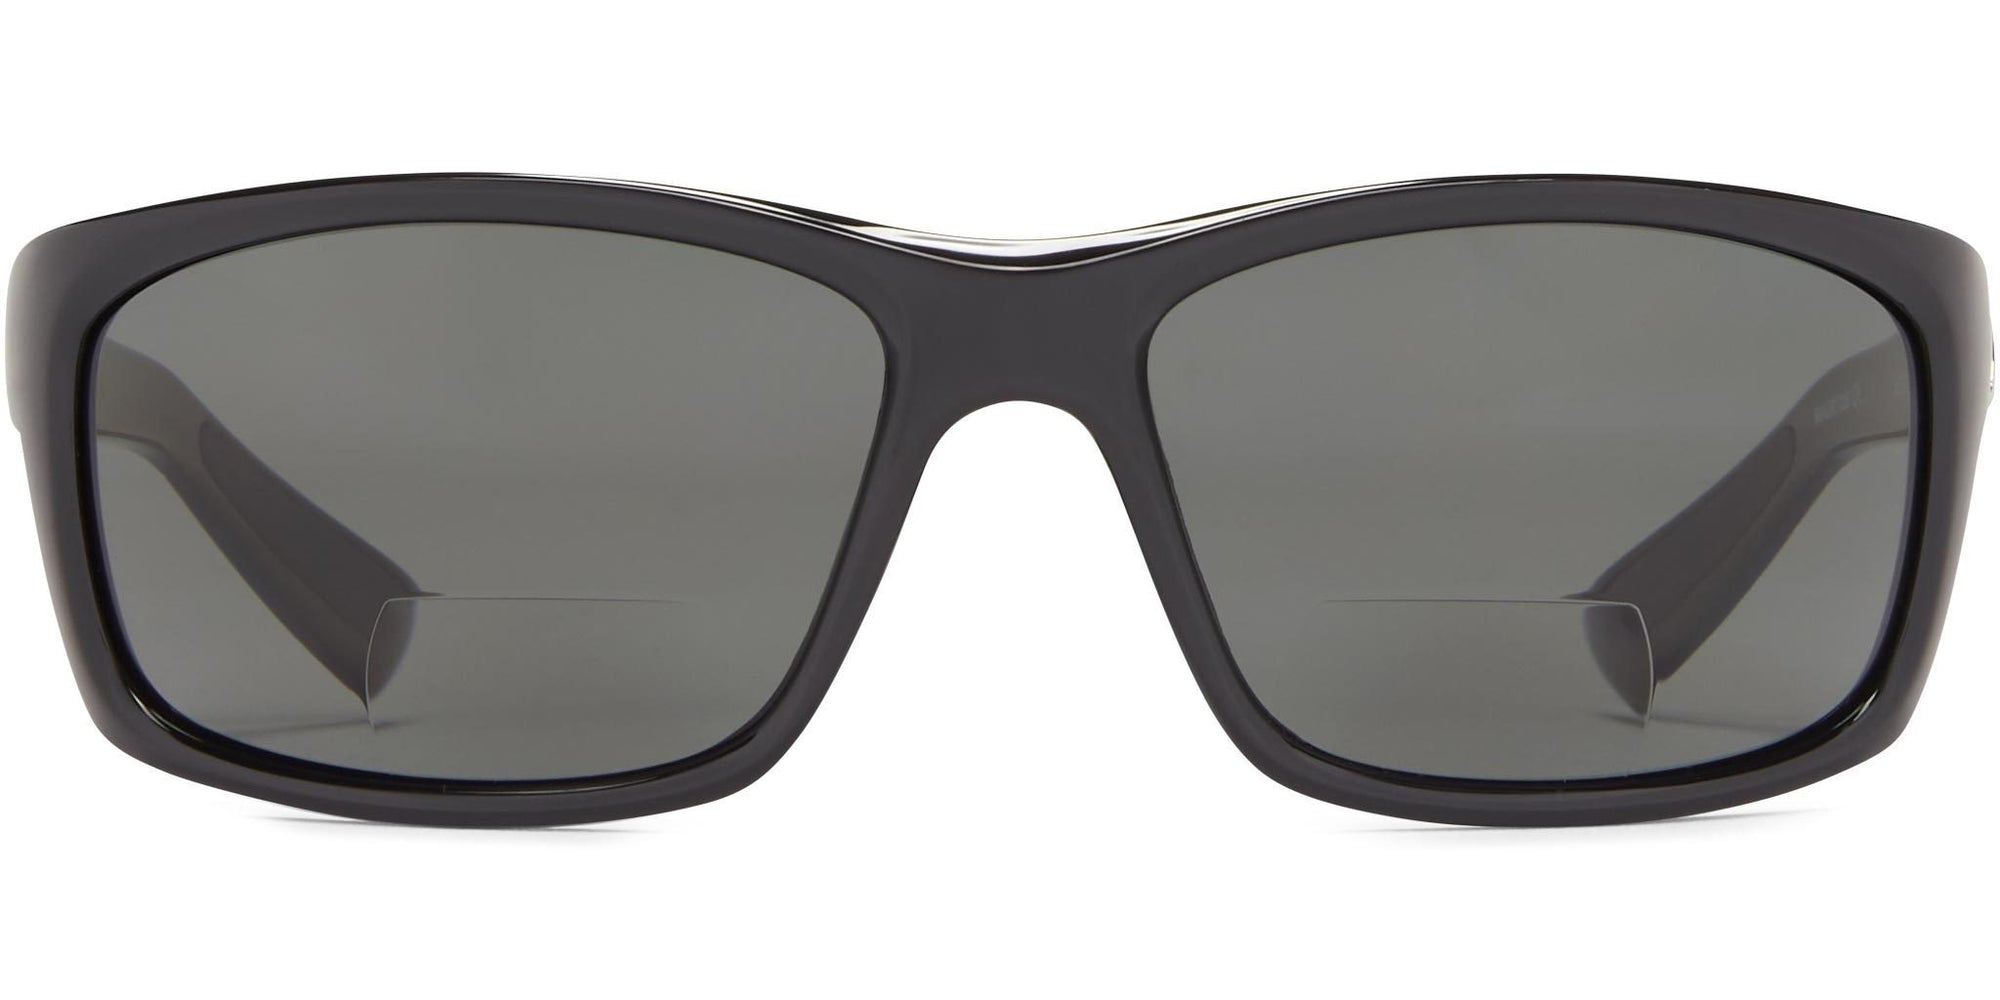 Surface Bifocal - Shiny Black/Gray Lens / 1.5 - Polarized Sunglasses